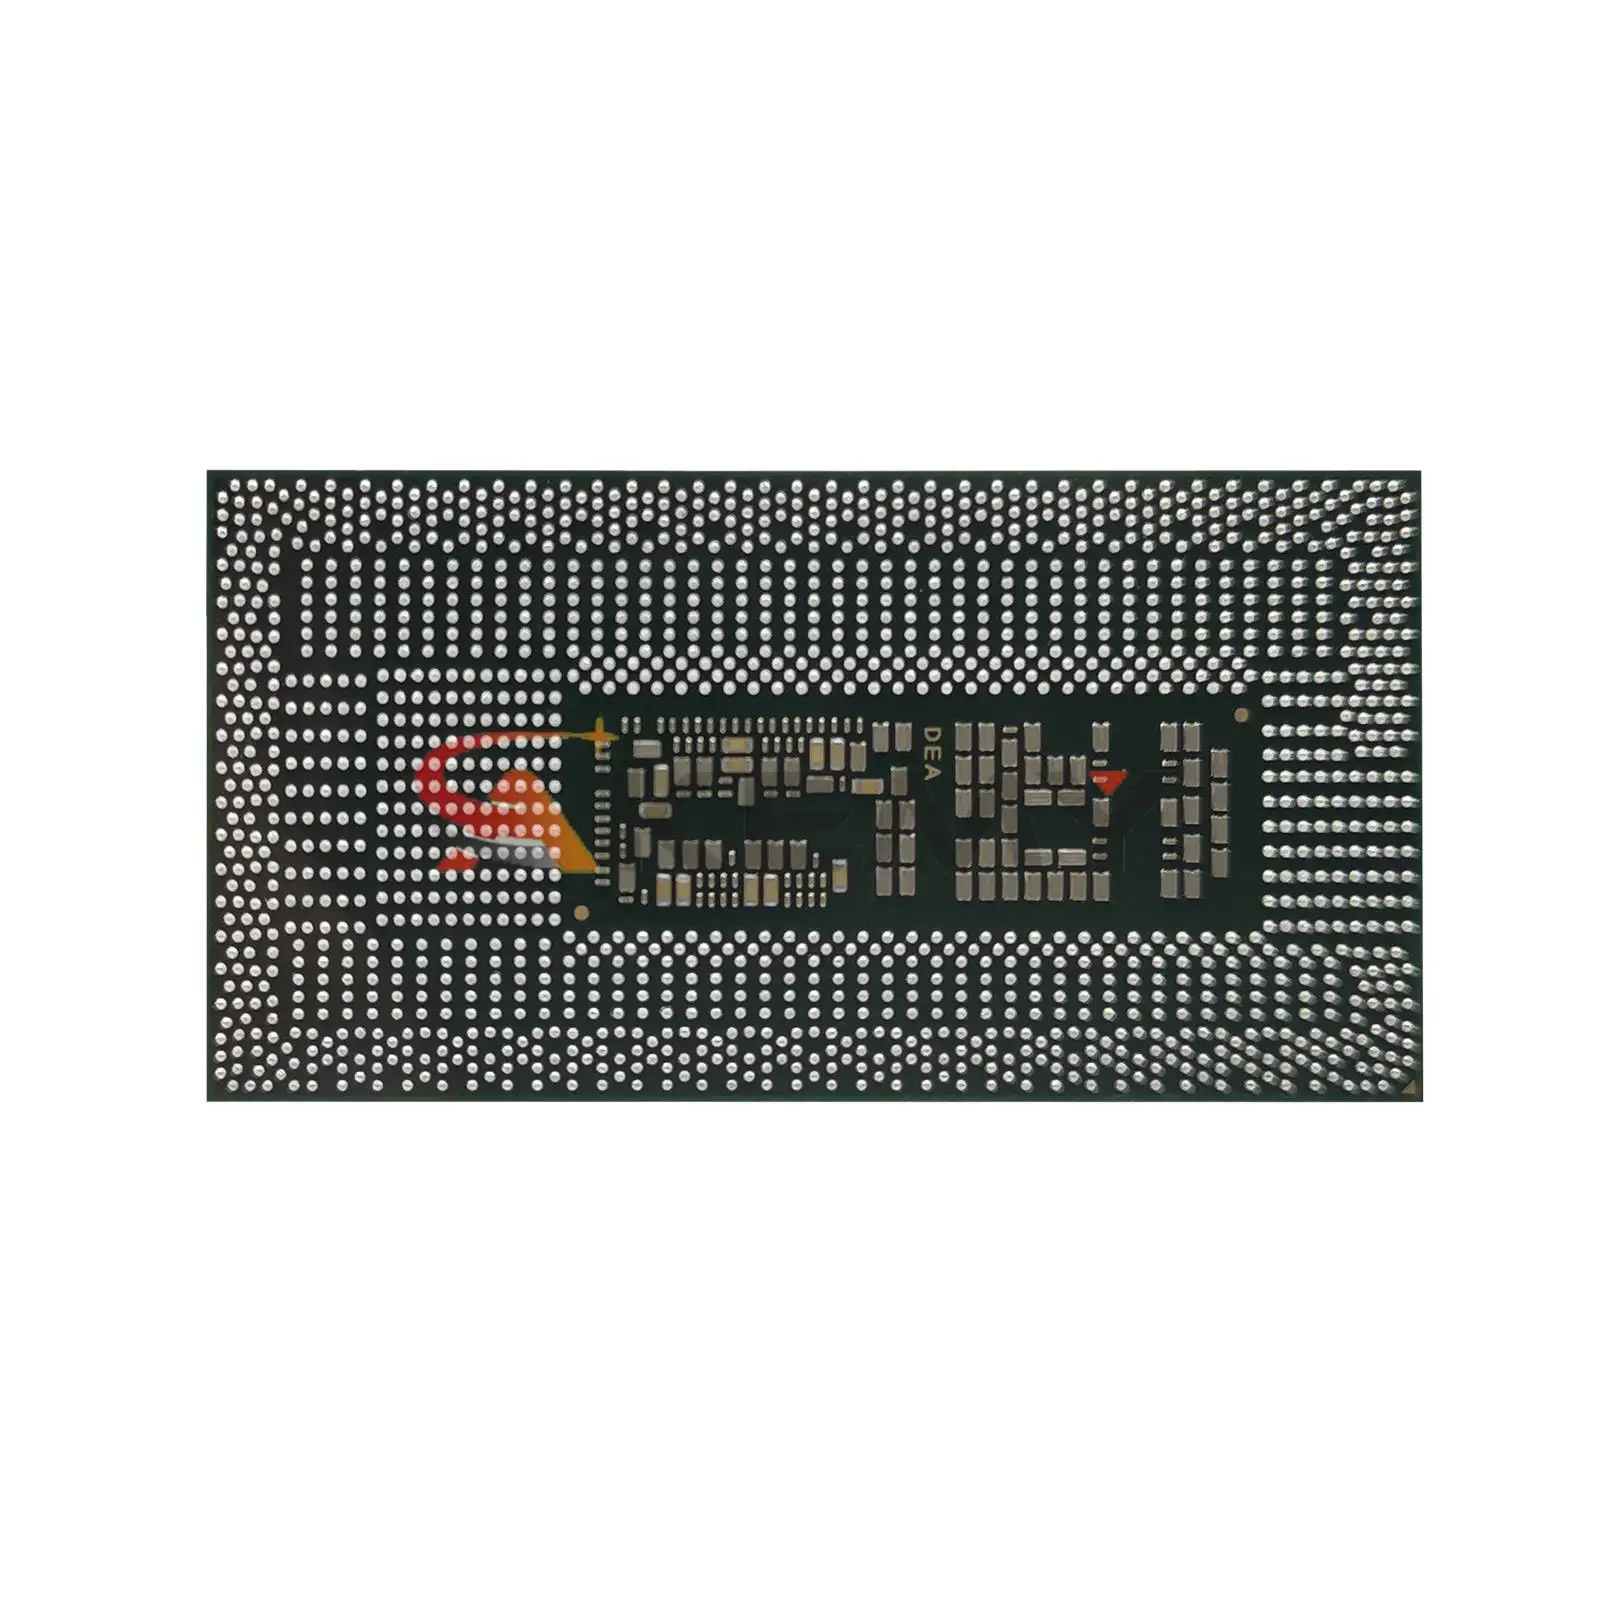 100% New I7 7660U SR368 I7-7660U CPU BGA Chipset